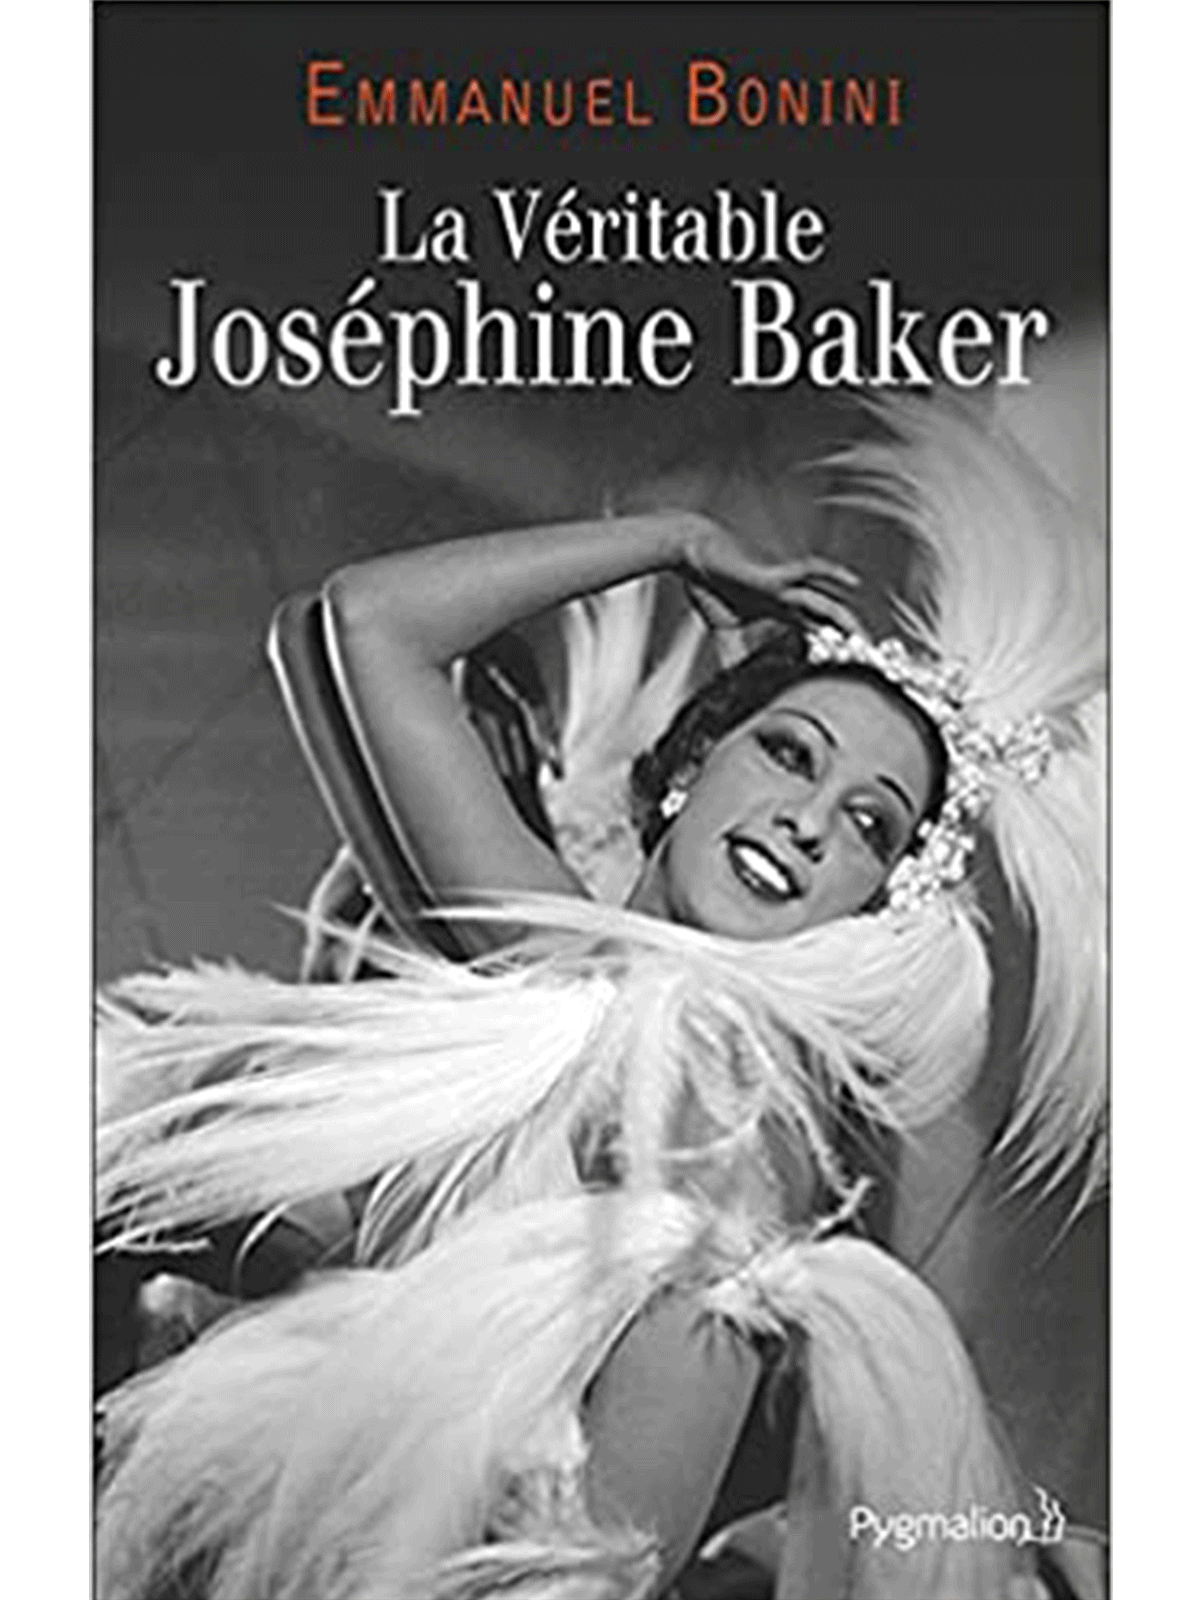 Emmanuel Bonini : La Véritable Joséphine Baker